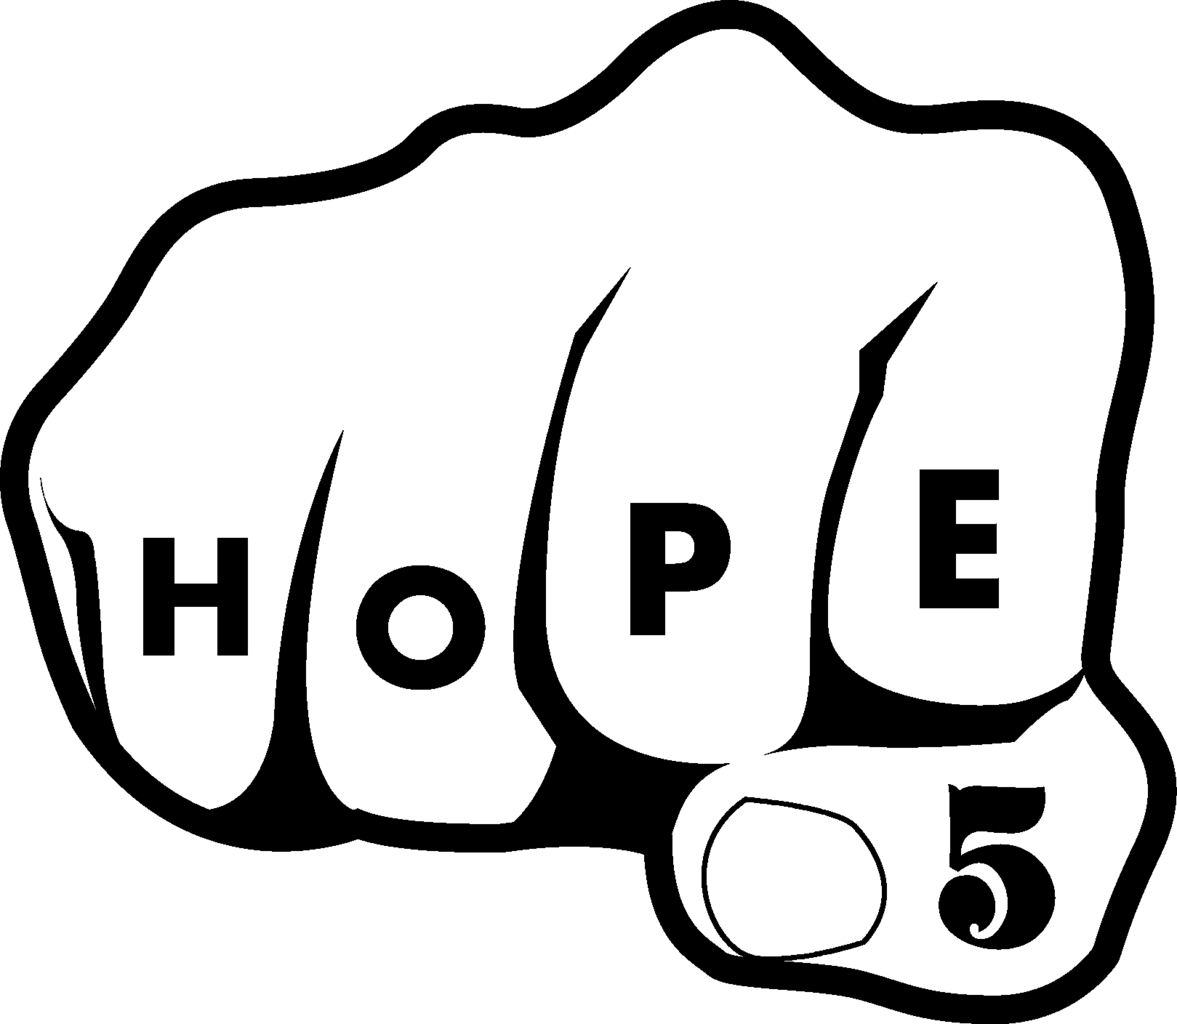 Image - Hope fist.png | To Kill A Mockingbird Wiki | Fandom ...